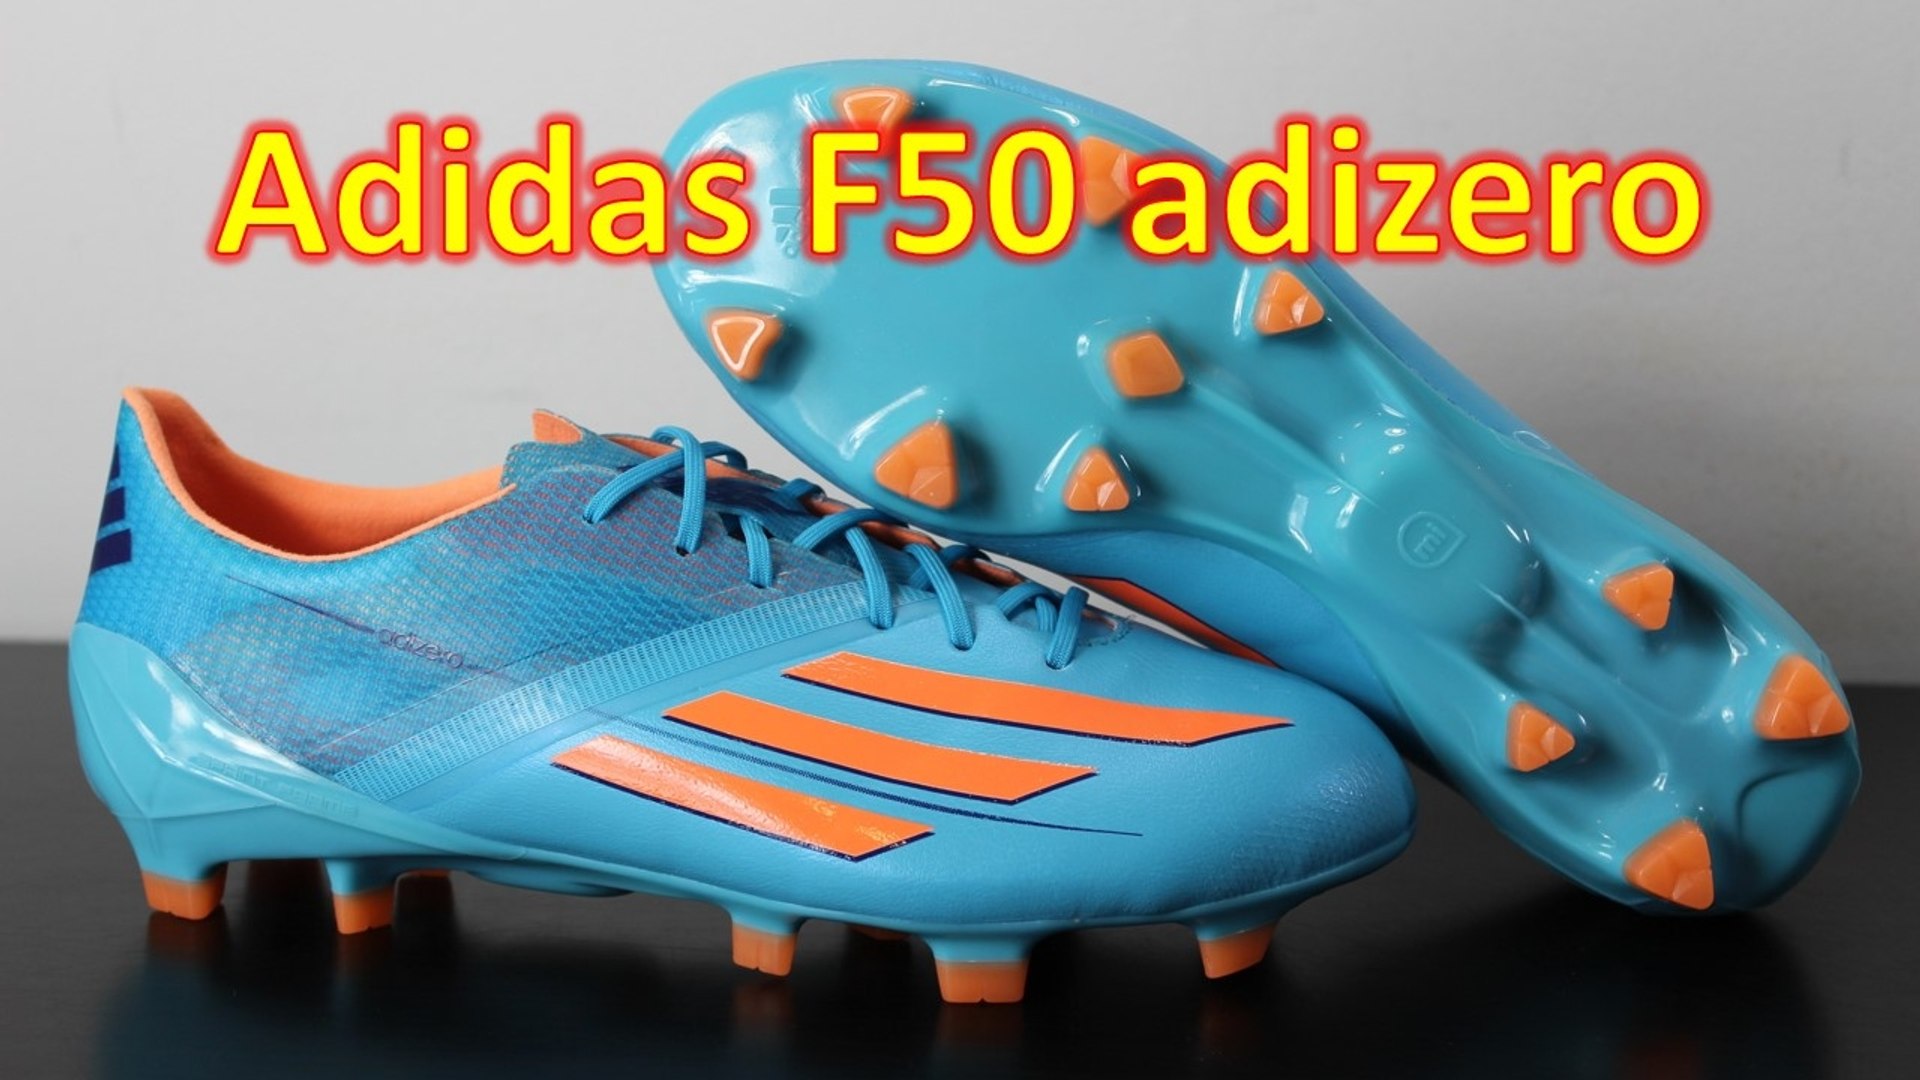 Adidas F50 adizero 2014 Samba Blue/Glow Orange - Unboxing - video  Dailymotion